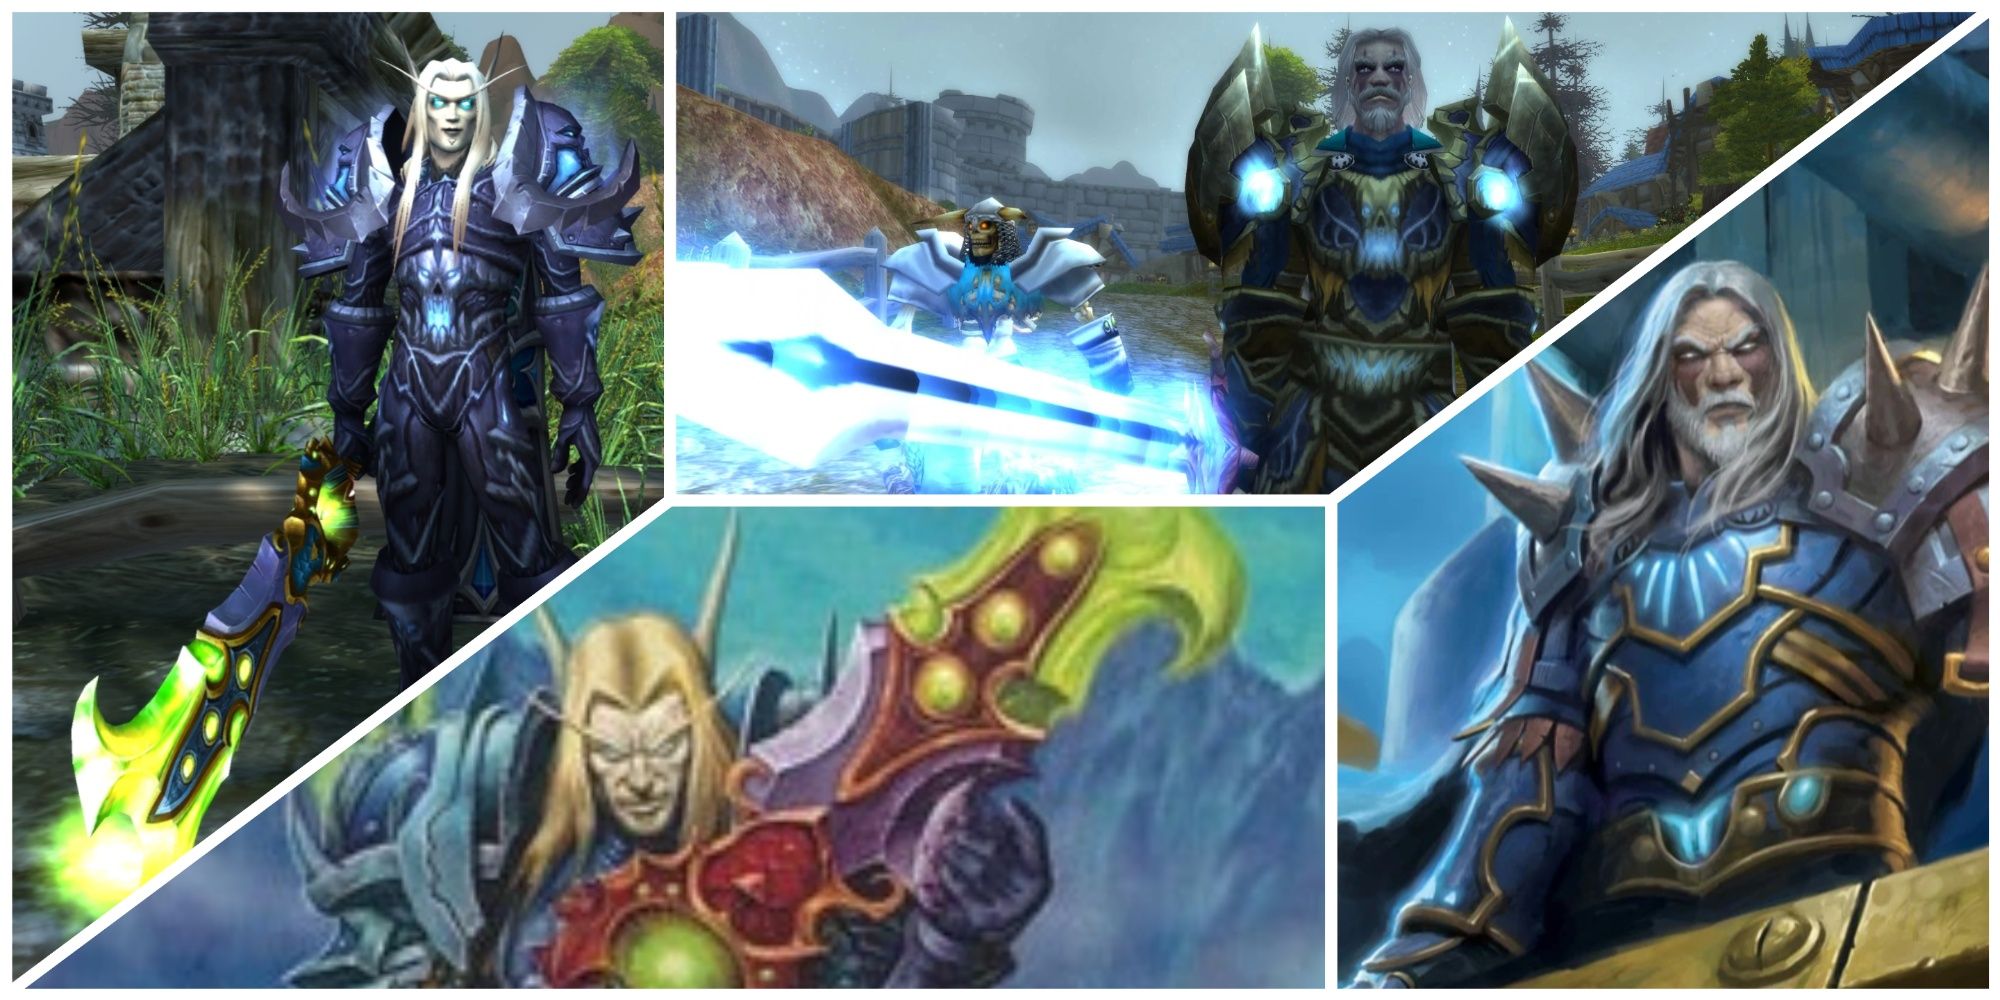 Koltira Deathweaver and Thaissarian in World of Warcraft